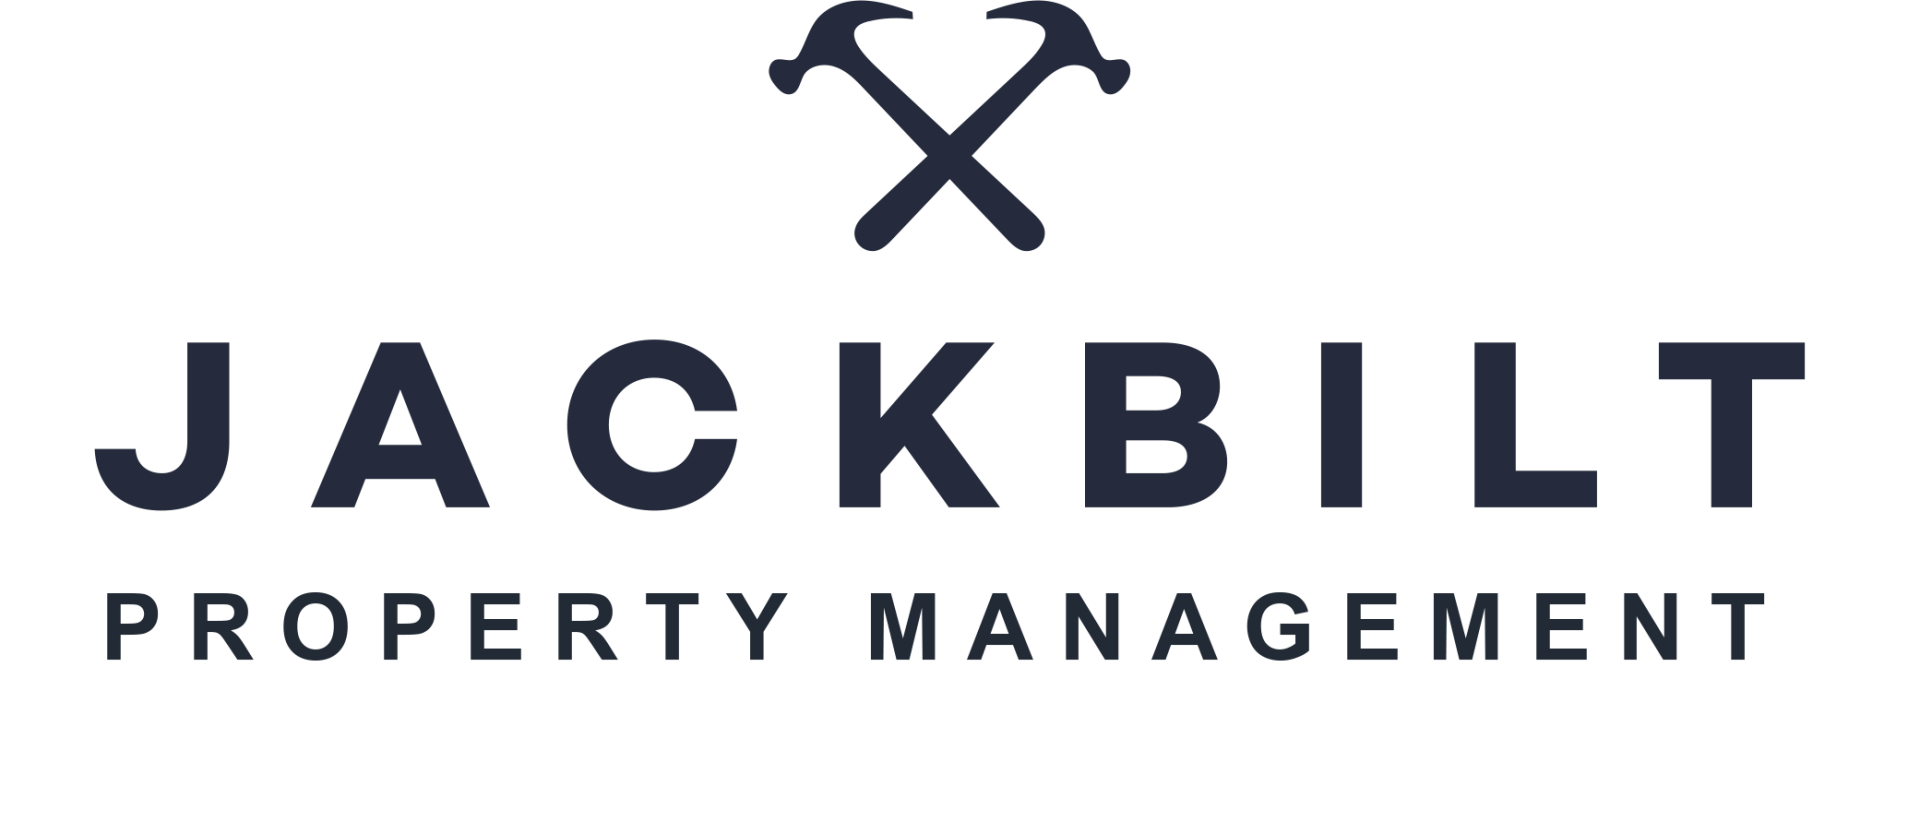 Jackbilt Property Management Logo